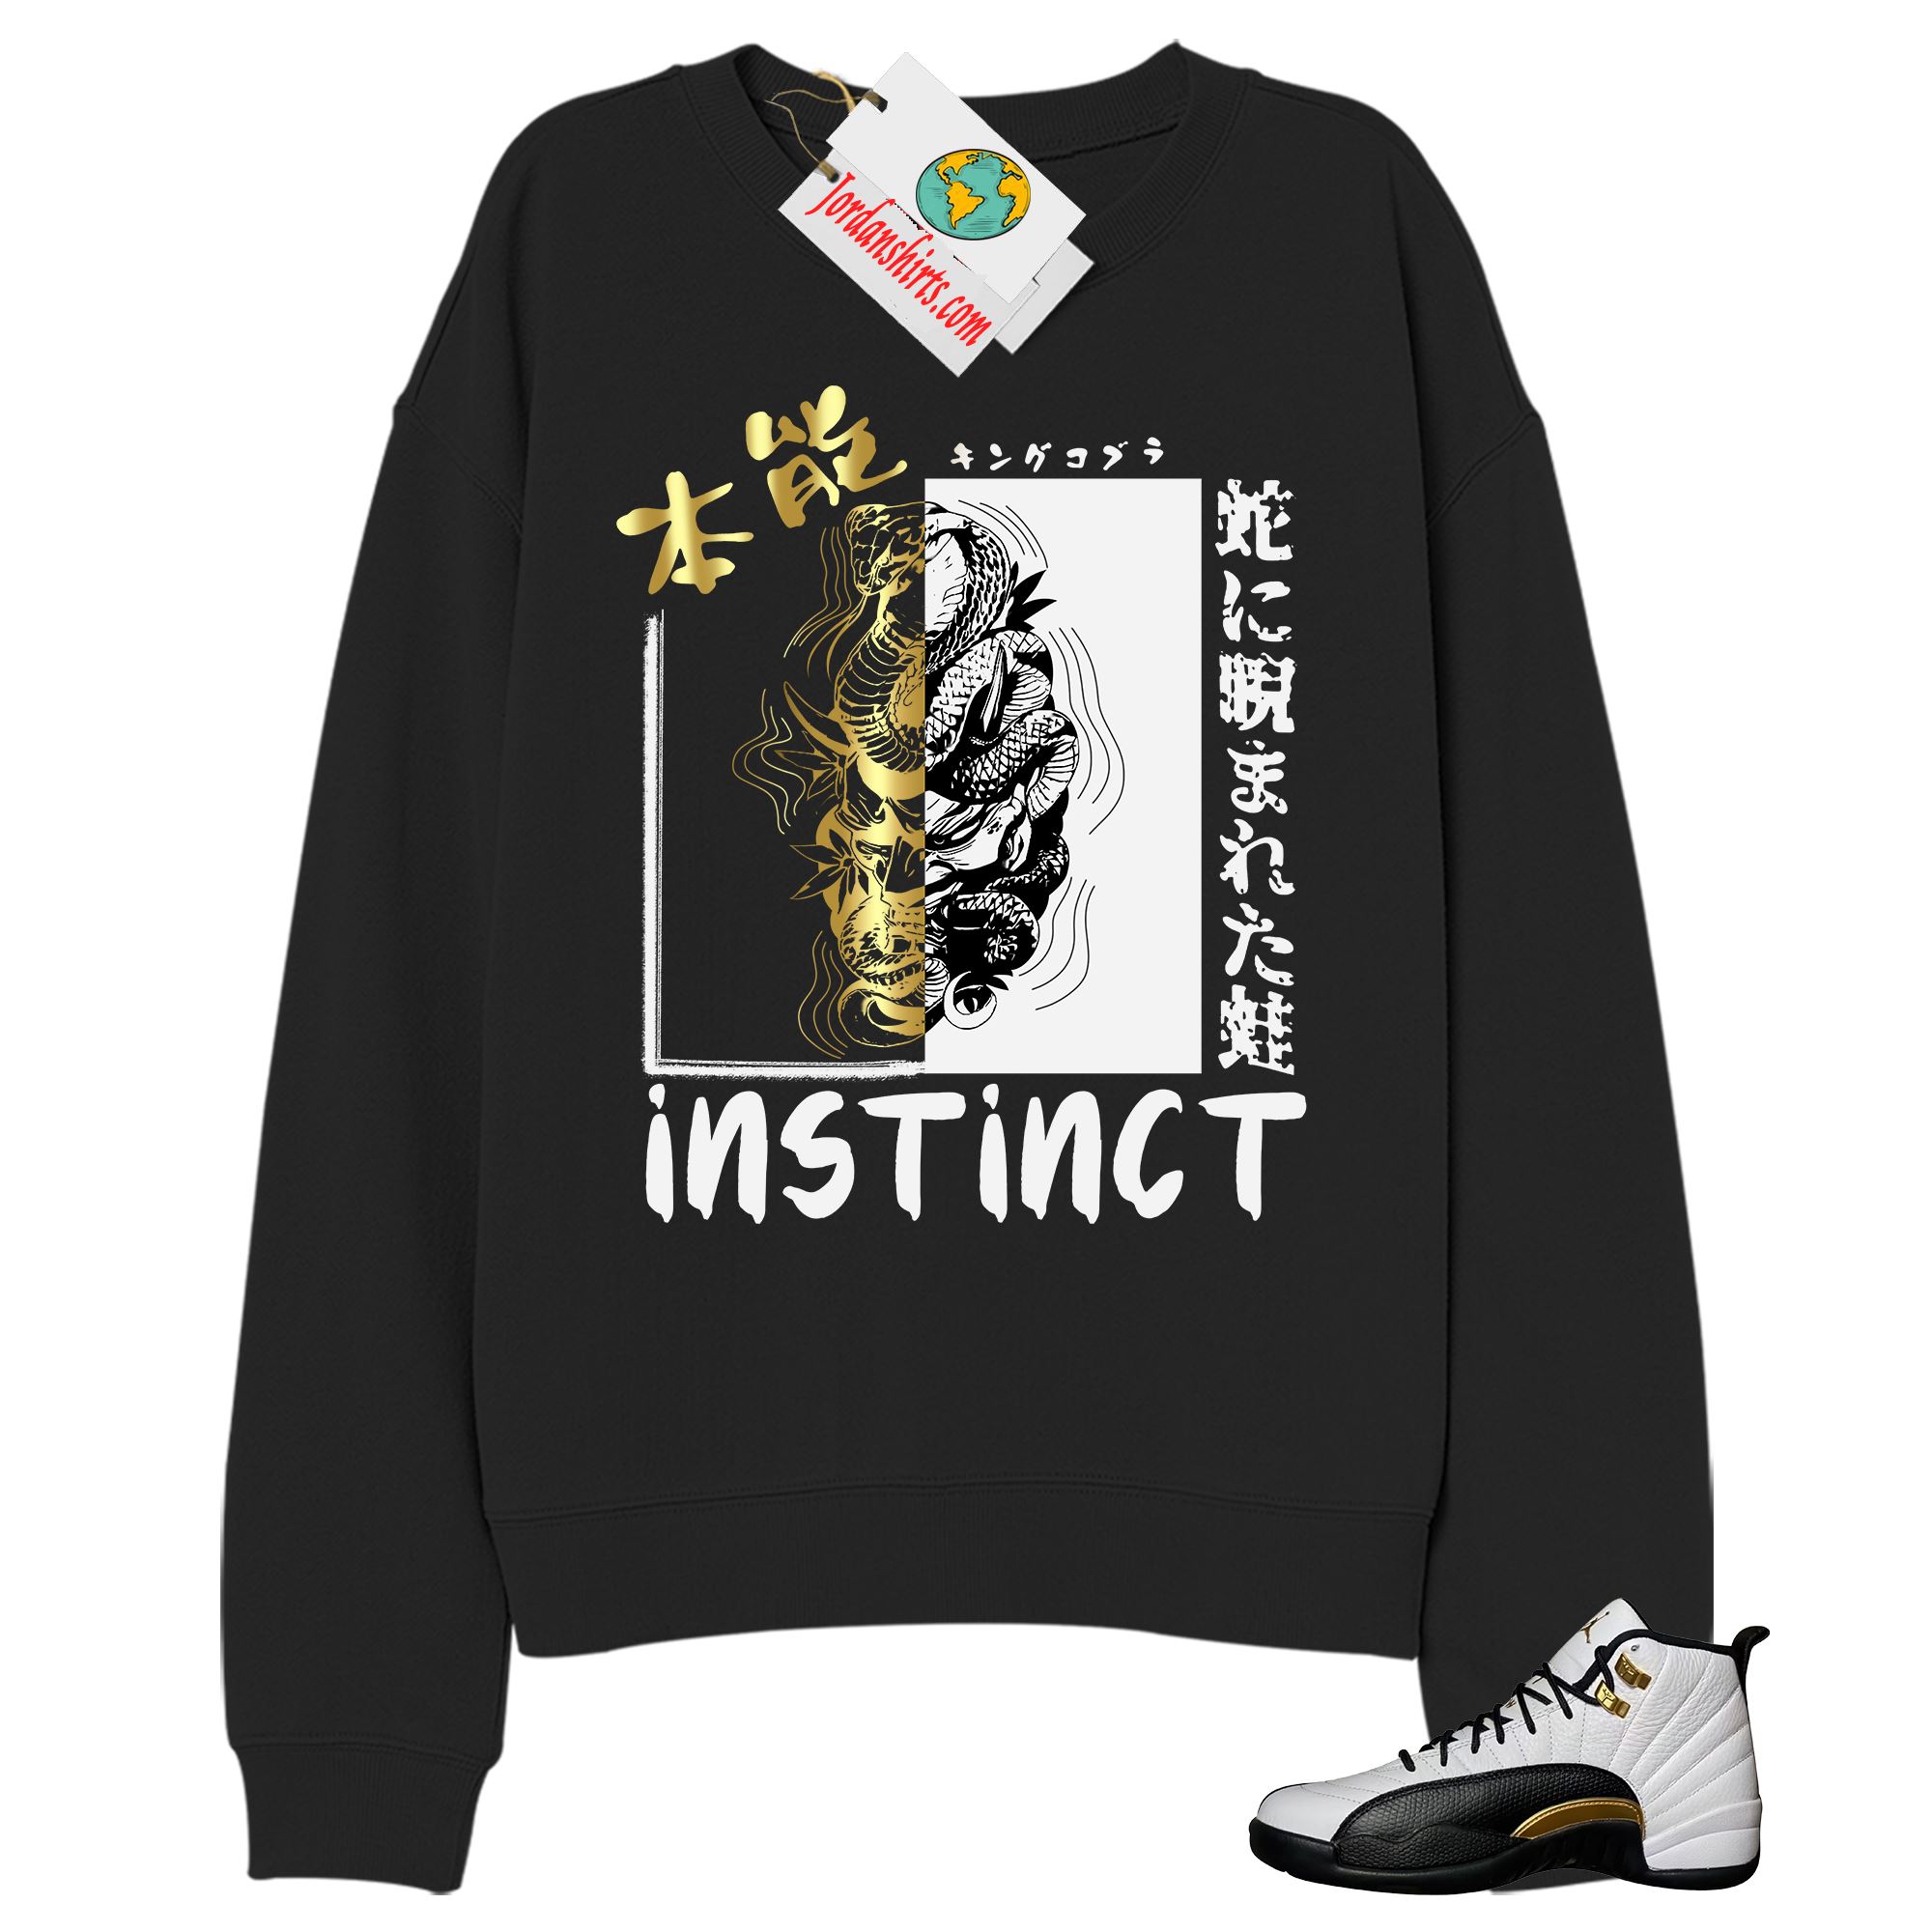 Jordan 12 Sweatshirt, Instinct Fearless Snake Black Sweatshirt Air Jordan 12 Royalty 12s Full Size Up To 5xl